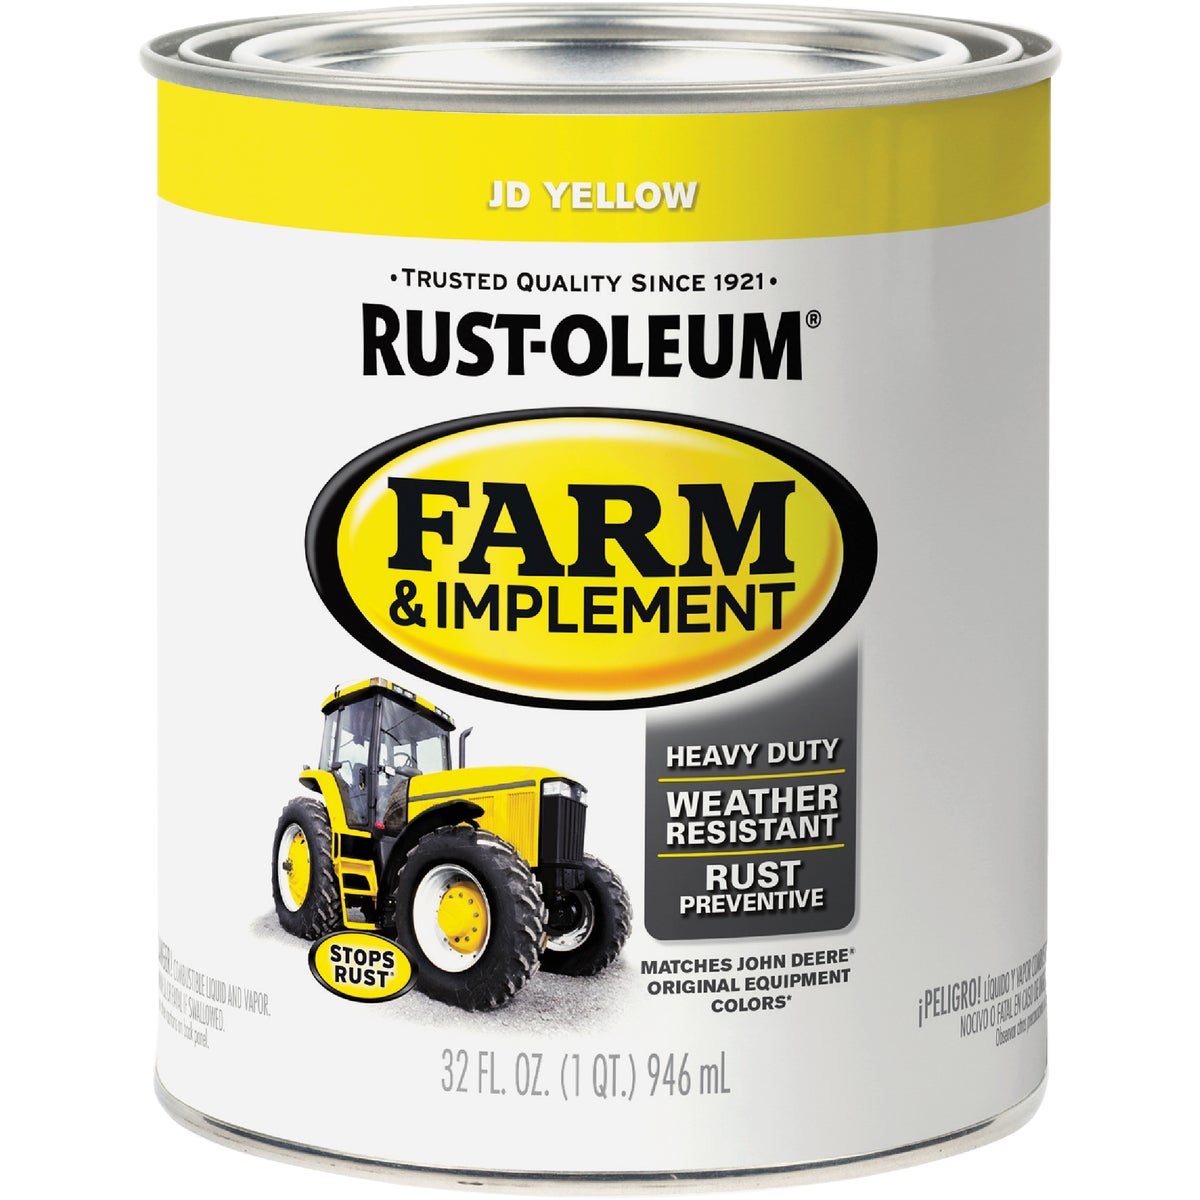 Rust-Oleum 1 Quart JD Yellow Gloss Farm & Implement Enamel